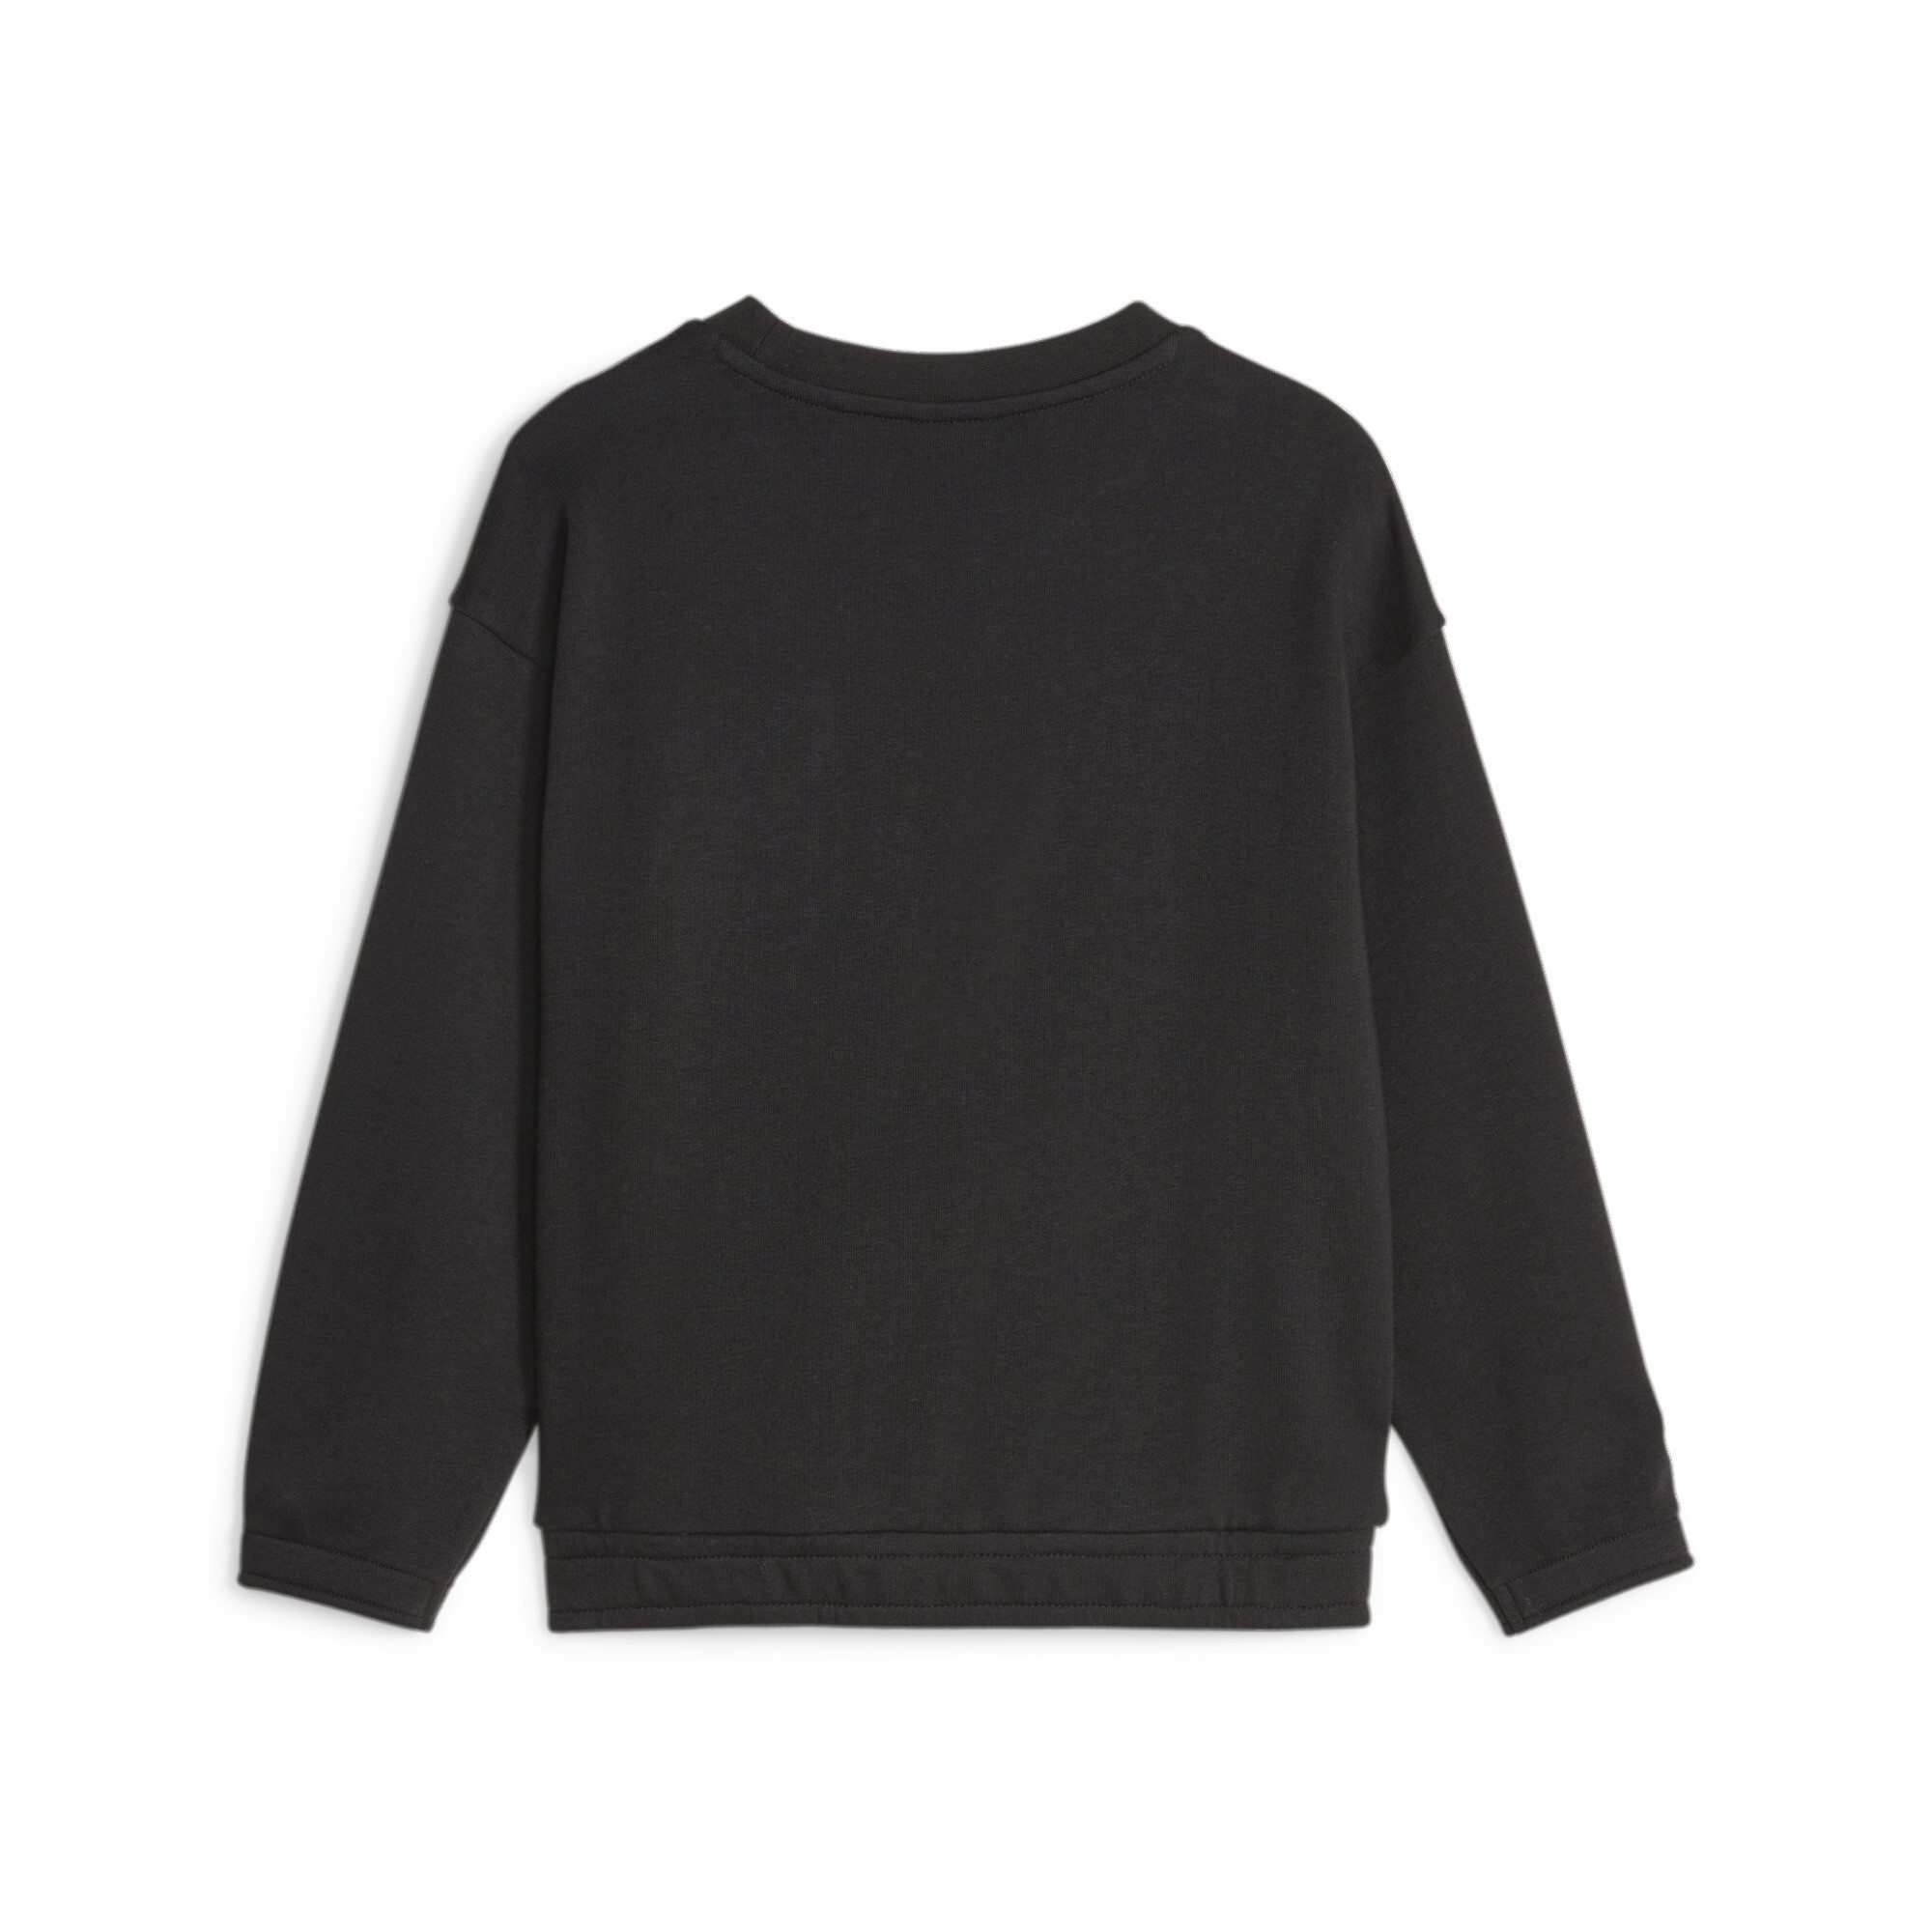 PUMA Classics Mix Match Sweatshirt In Black, Size 4-5 Youth